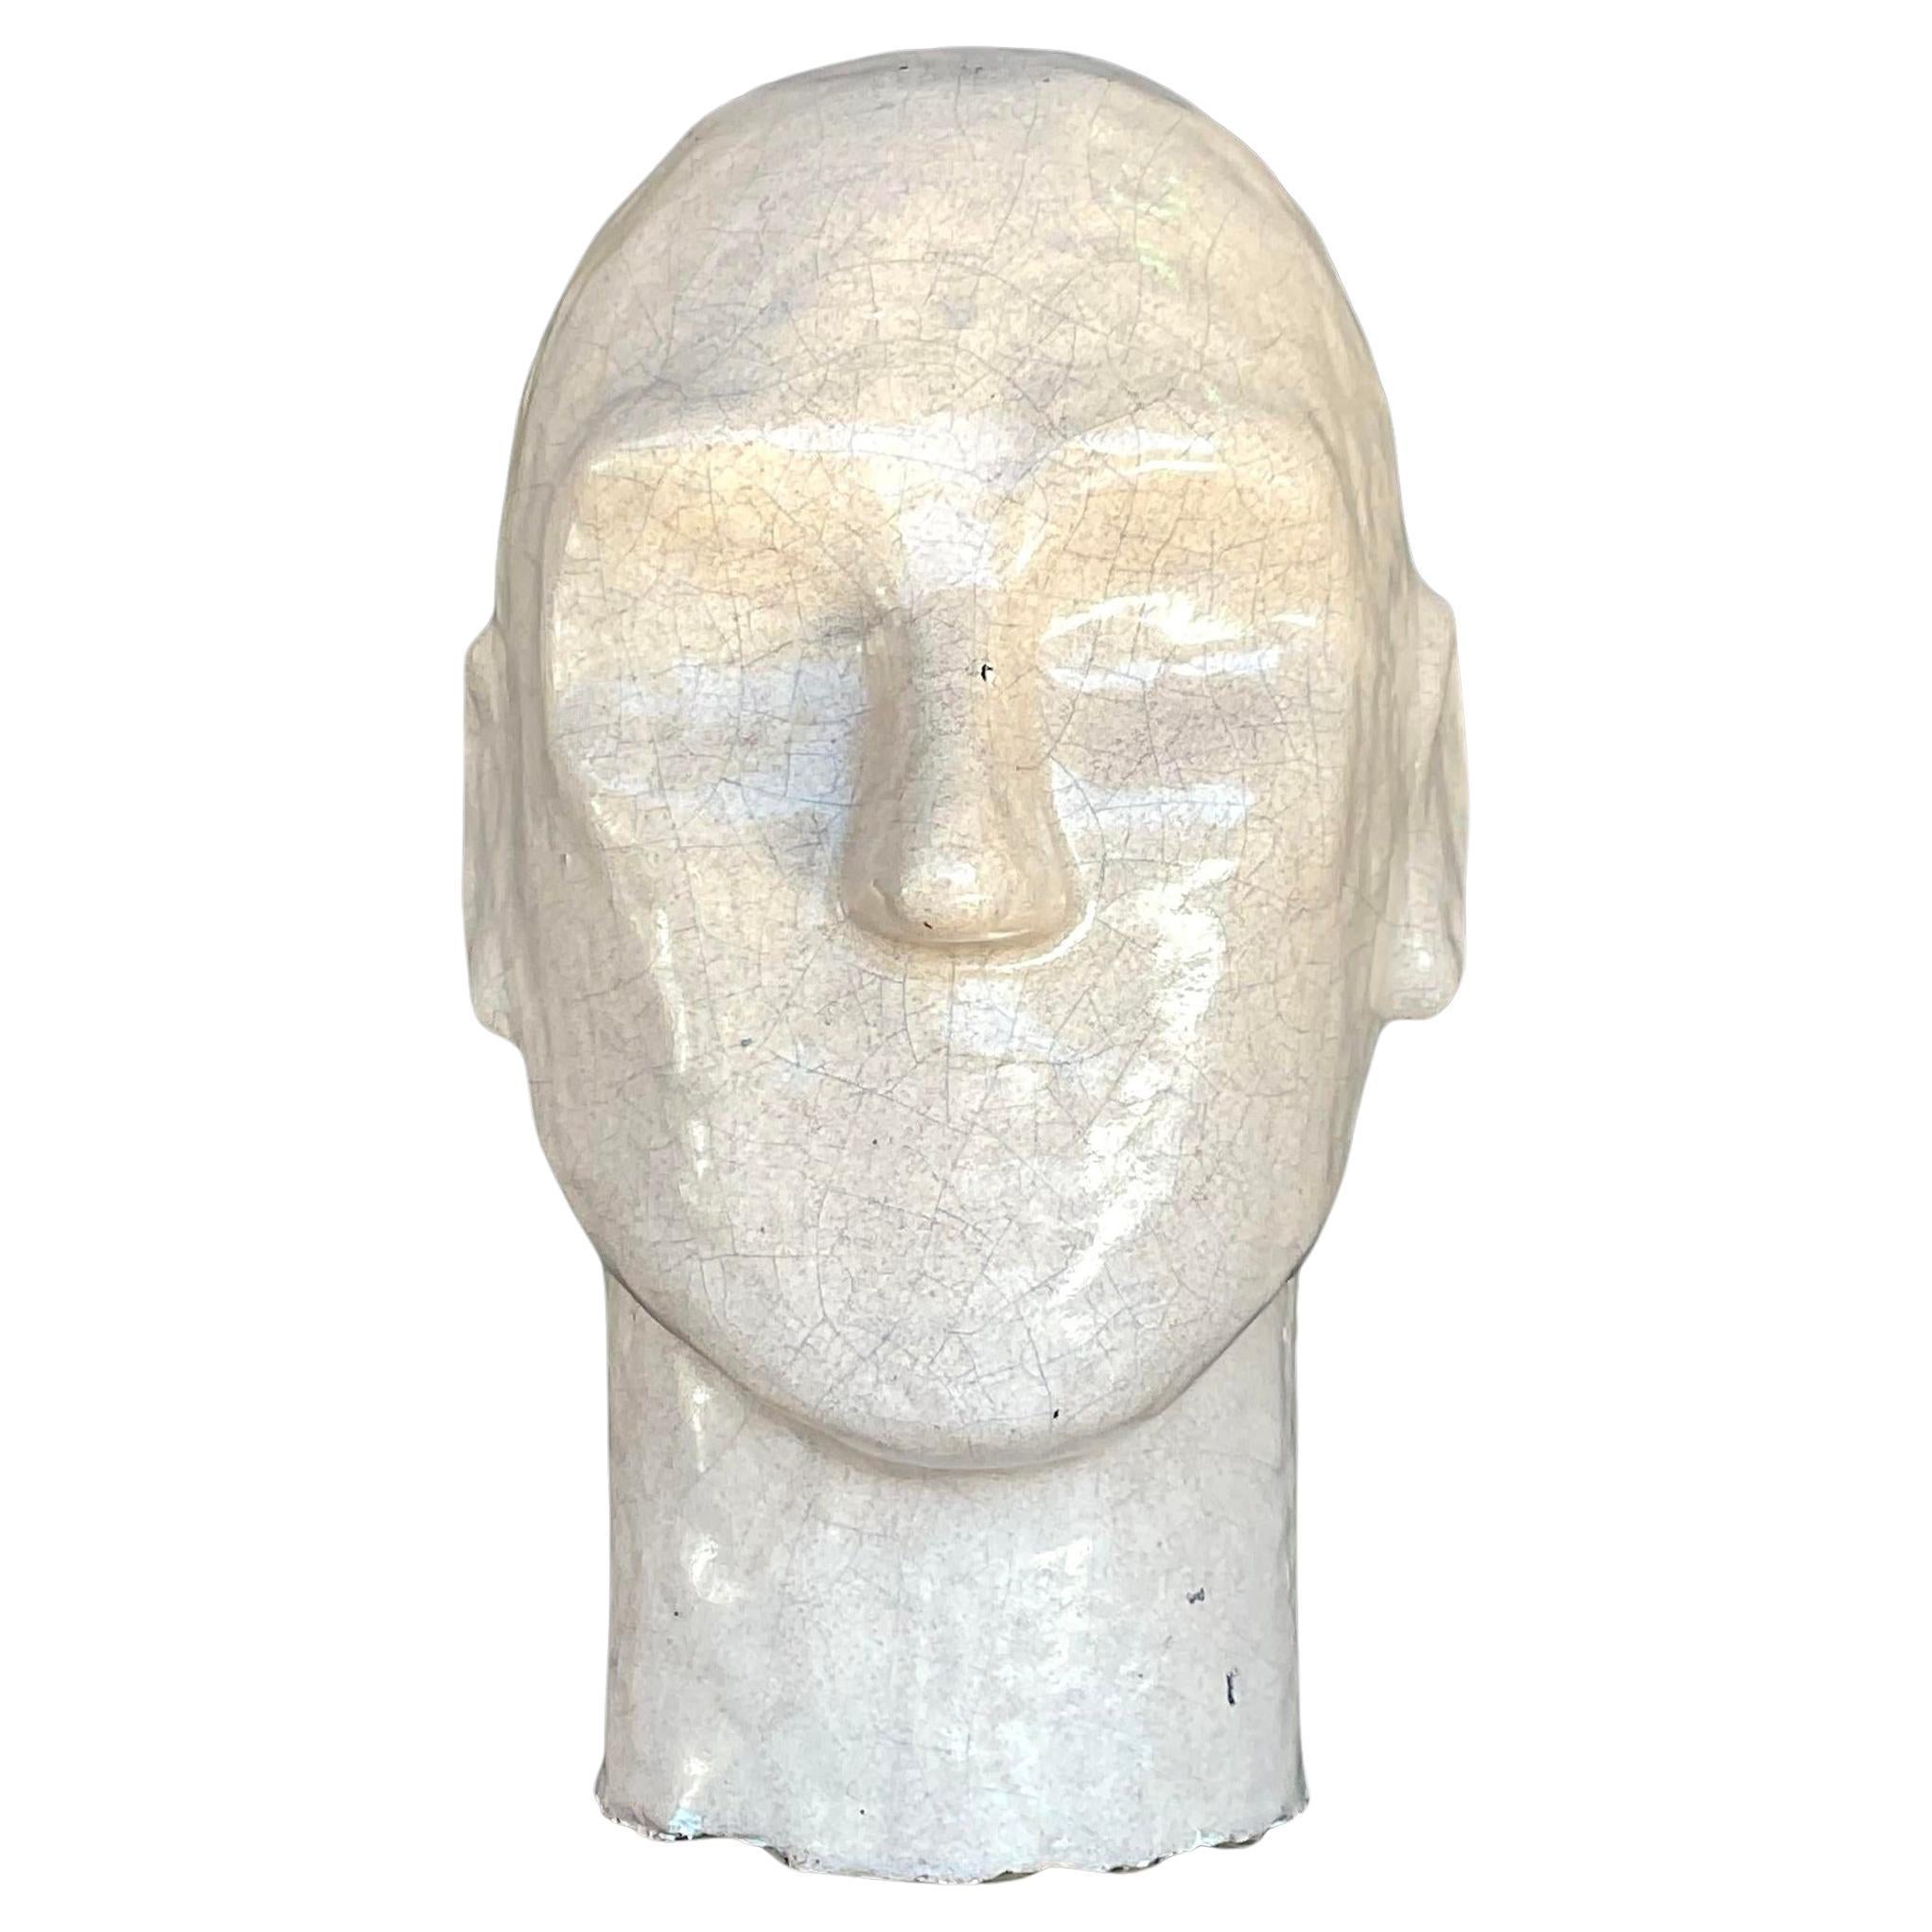 Vintage Boho glasierte Keramik-Kopf-Skulptur